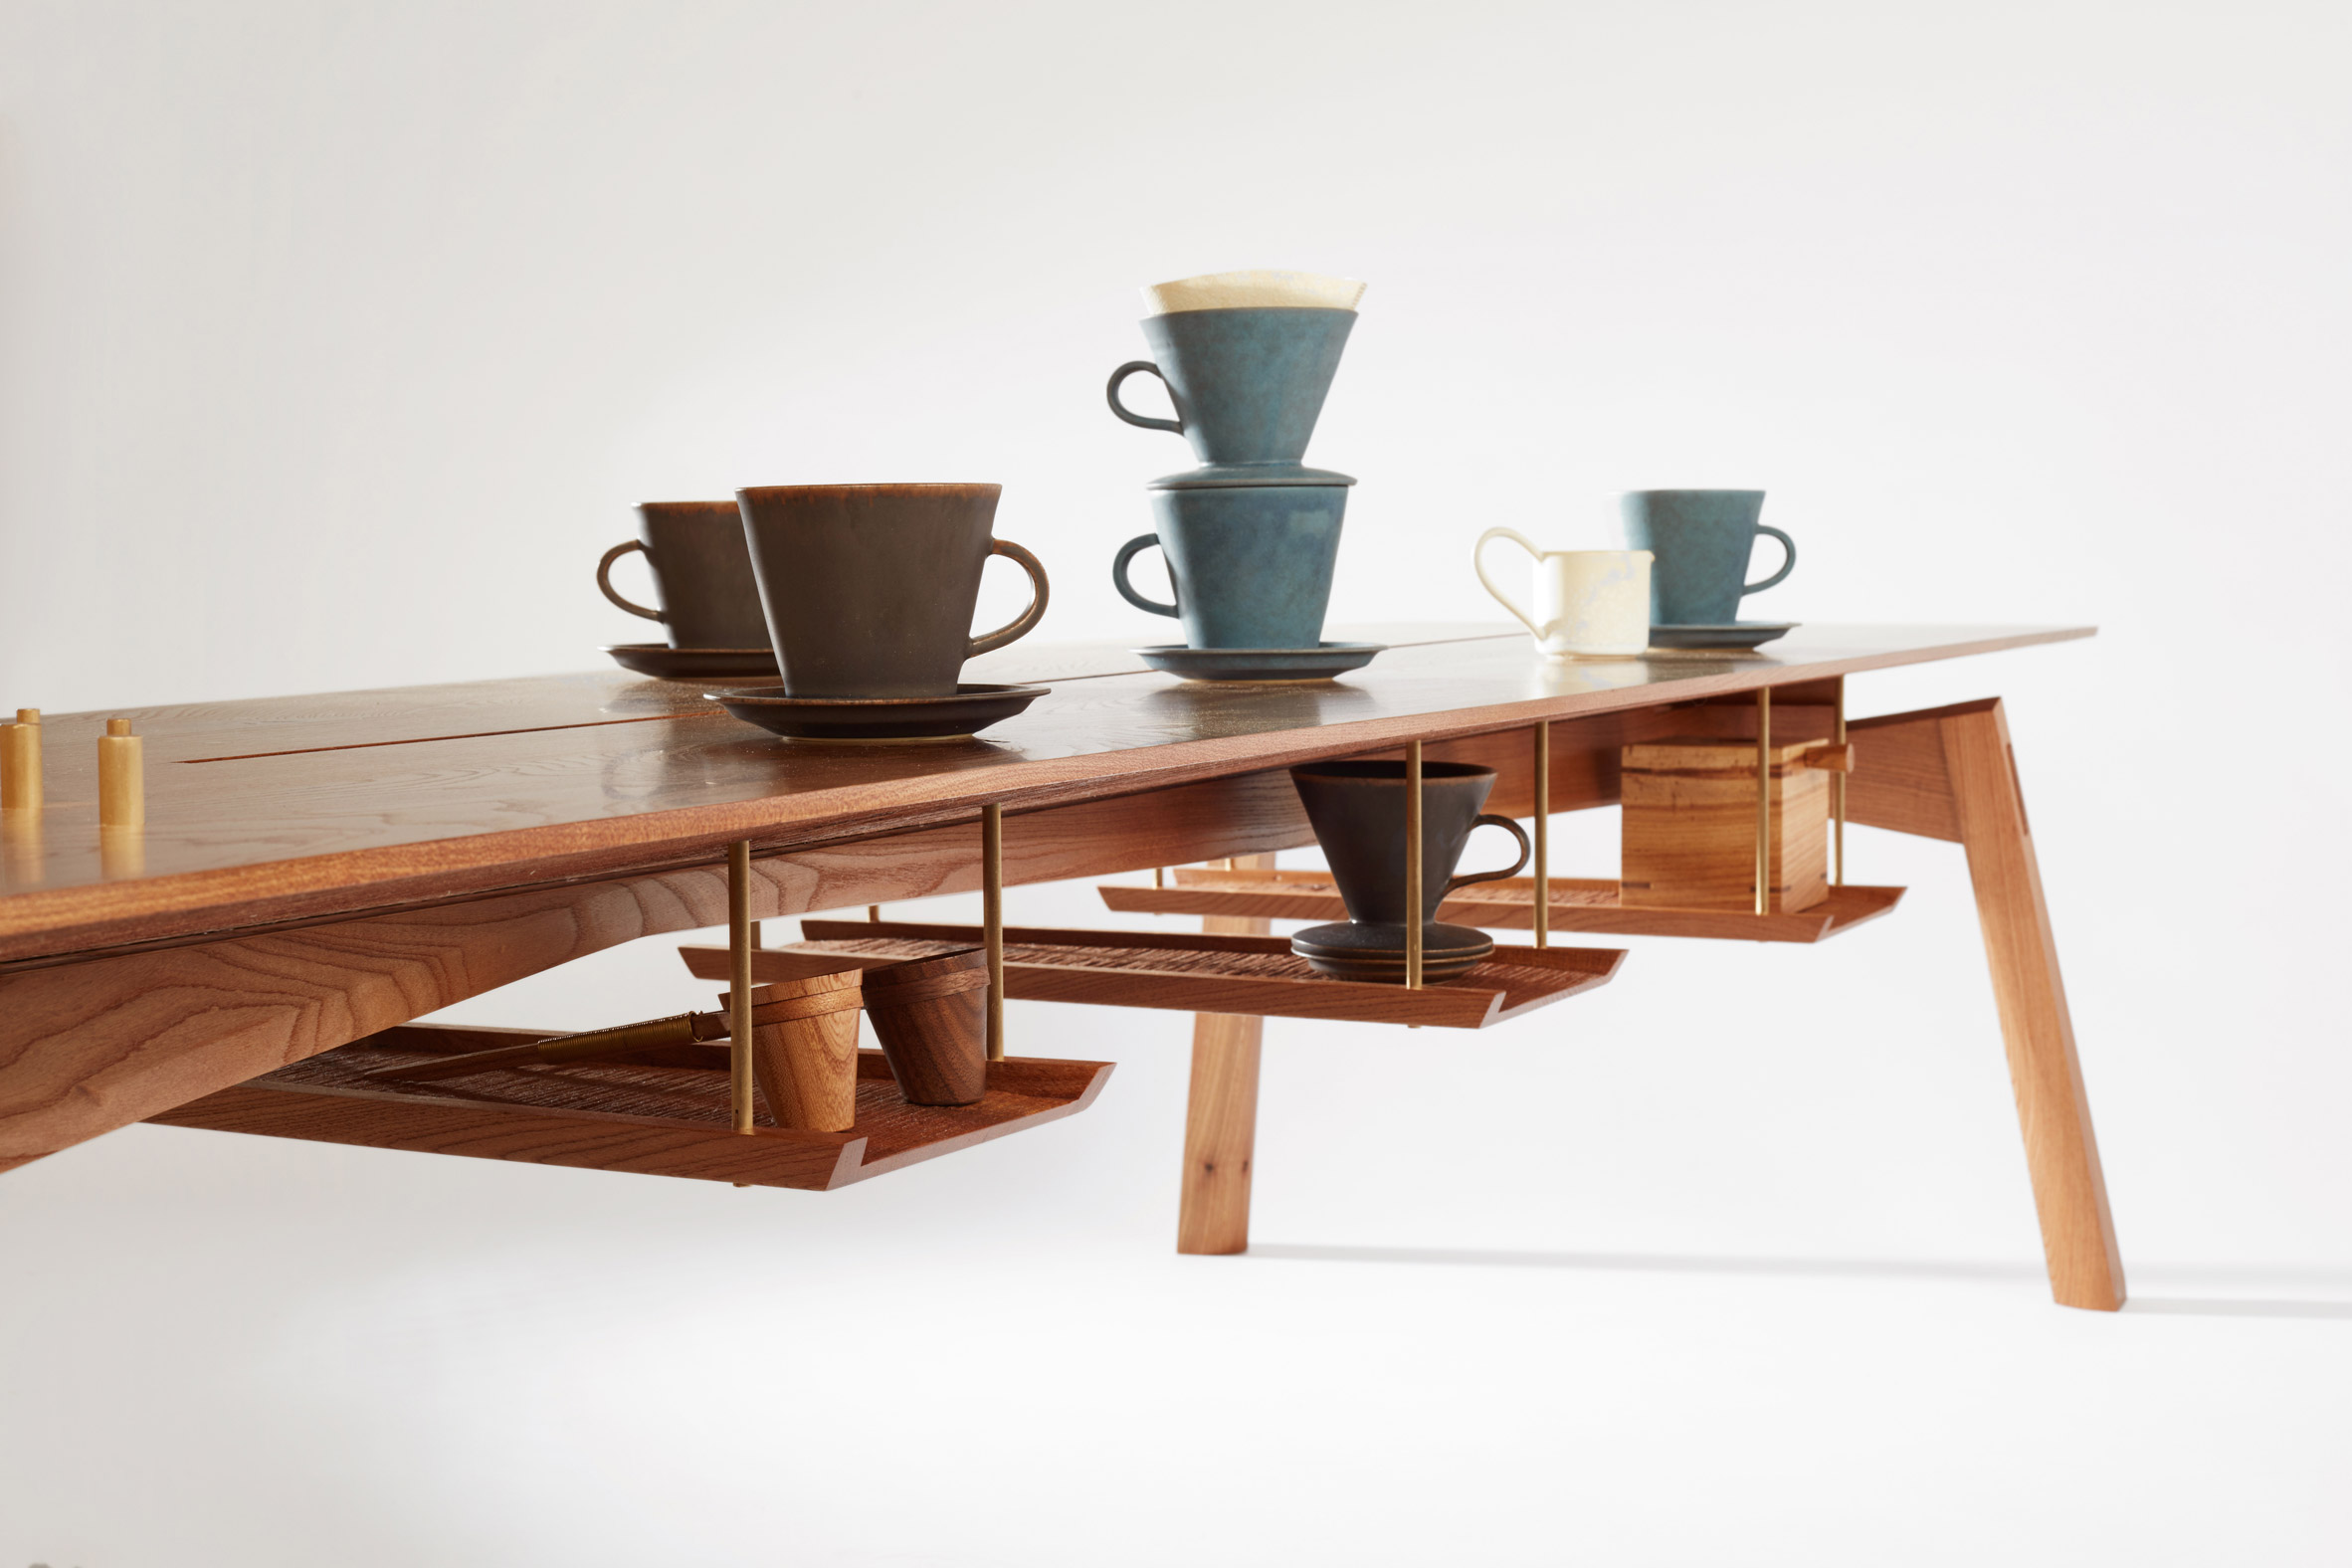 Interiors: Japanese-inspired kitchen ideas from woodworker Hugh Miller